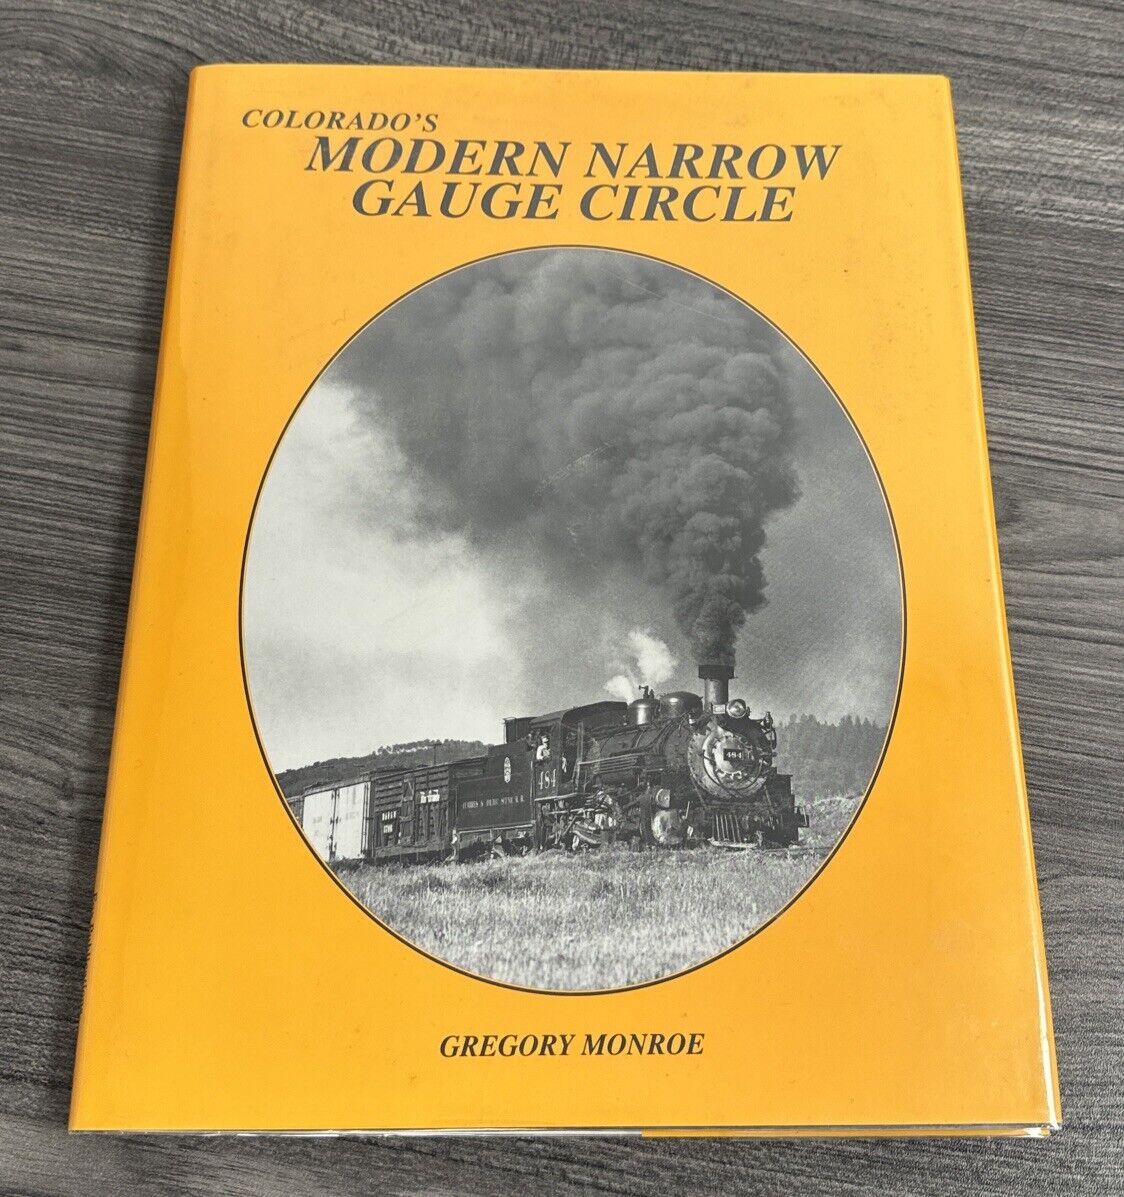 Colorados Modern Narrow Gauge Circle by Gregory Monroe - Signed Hard Copy in DJ